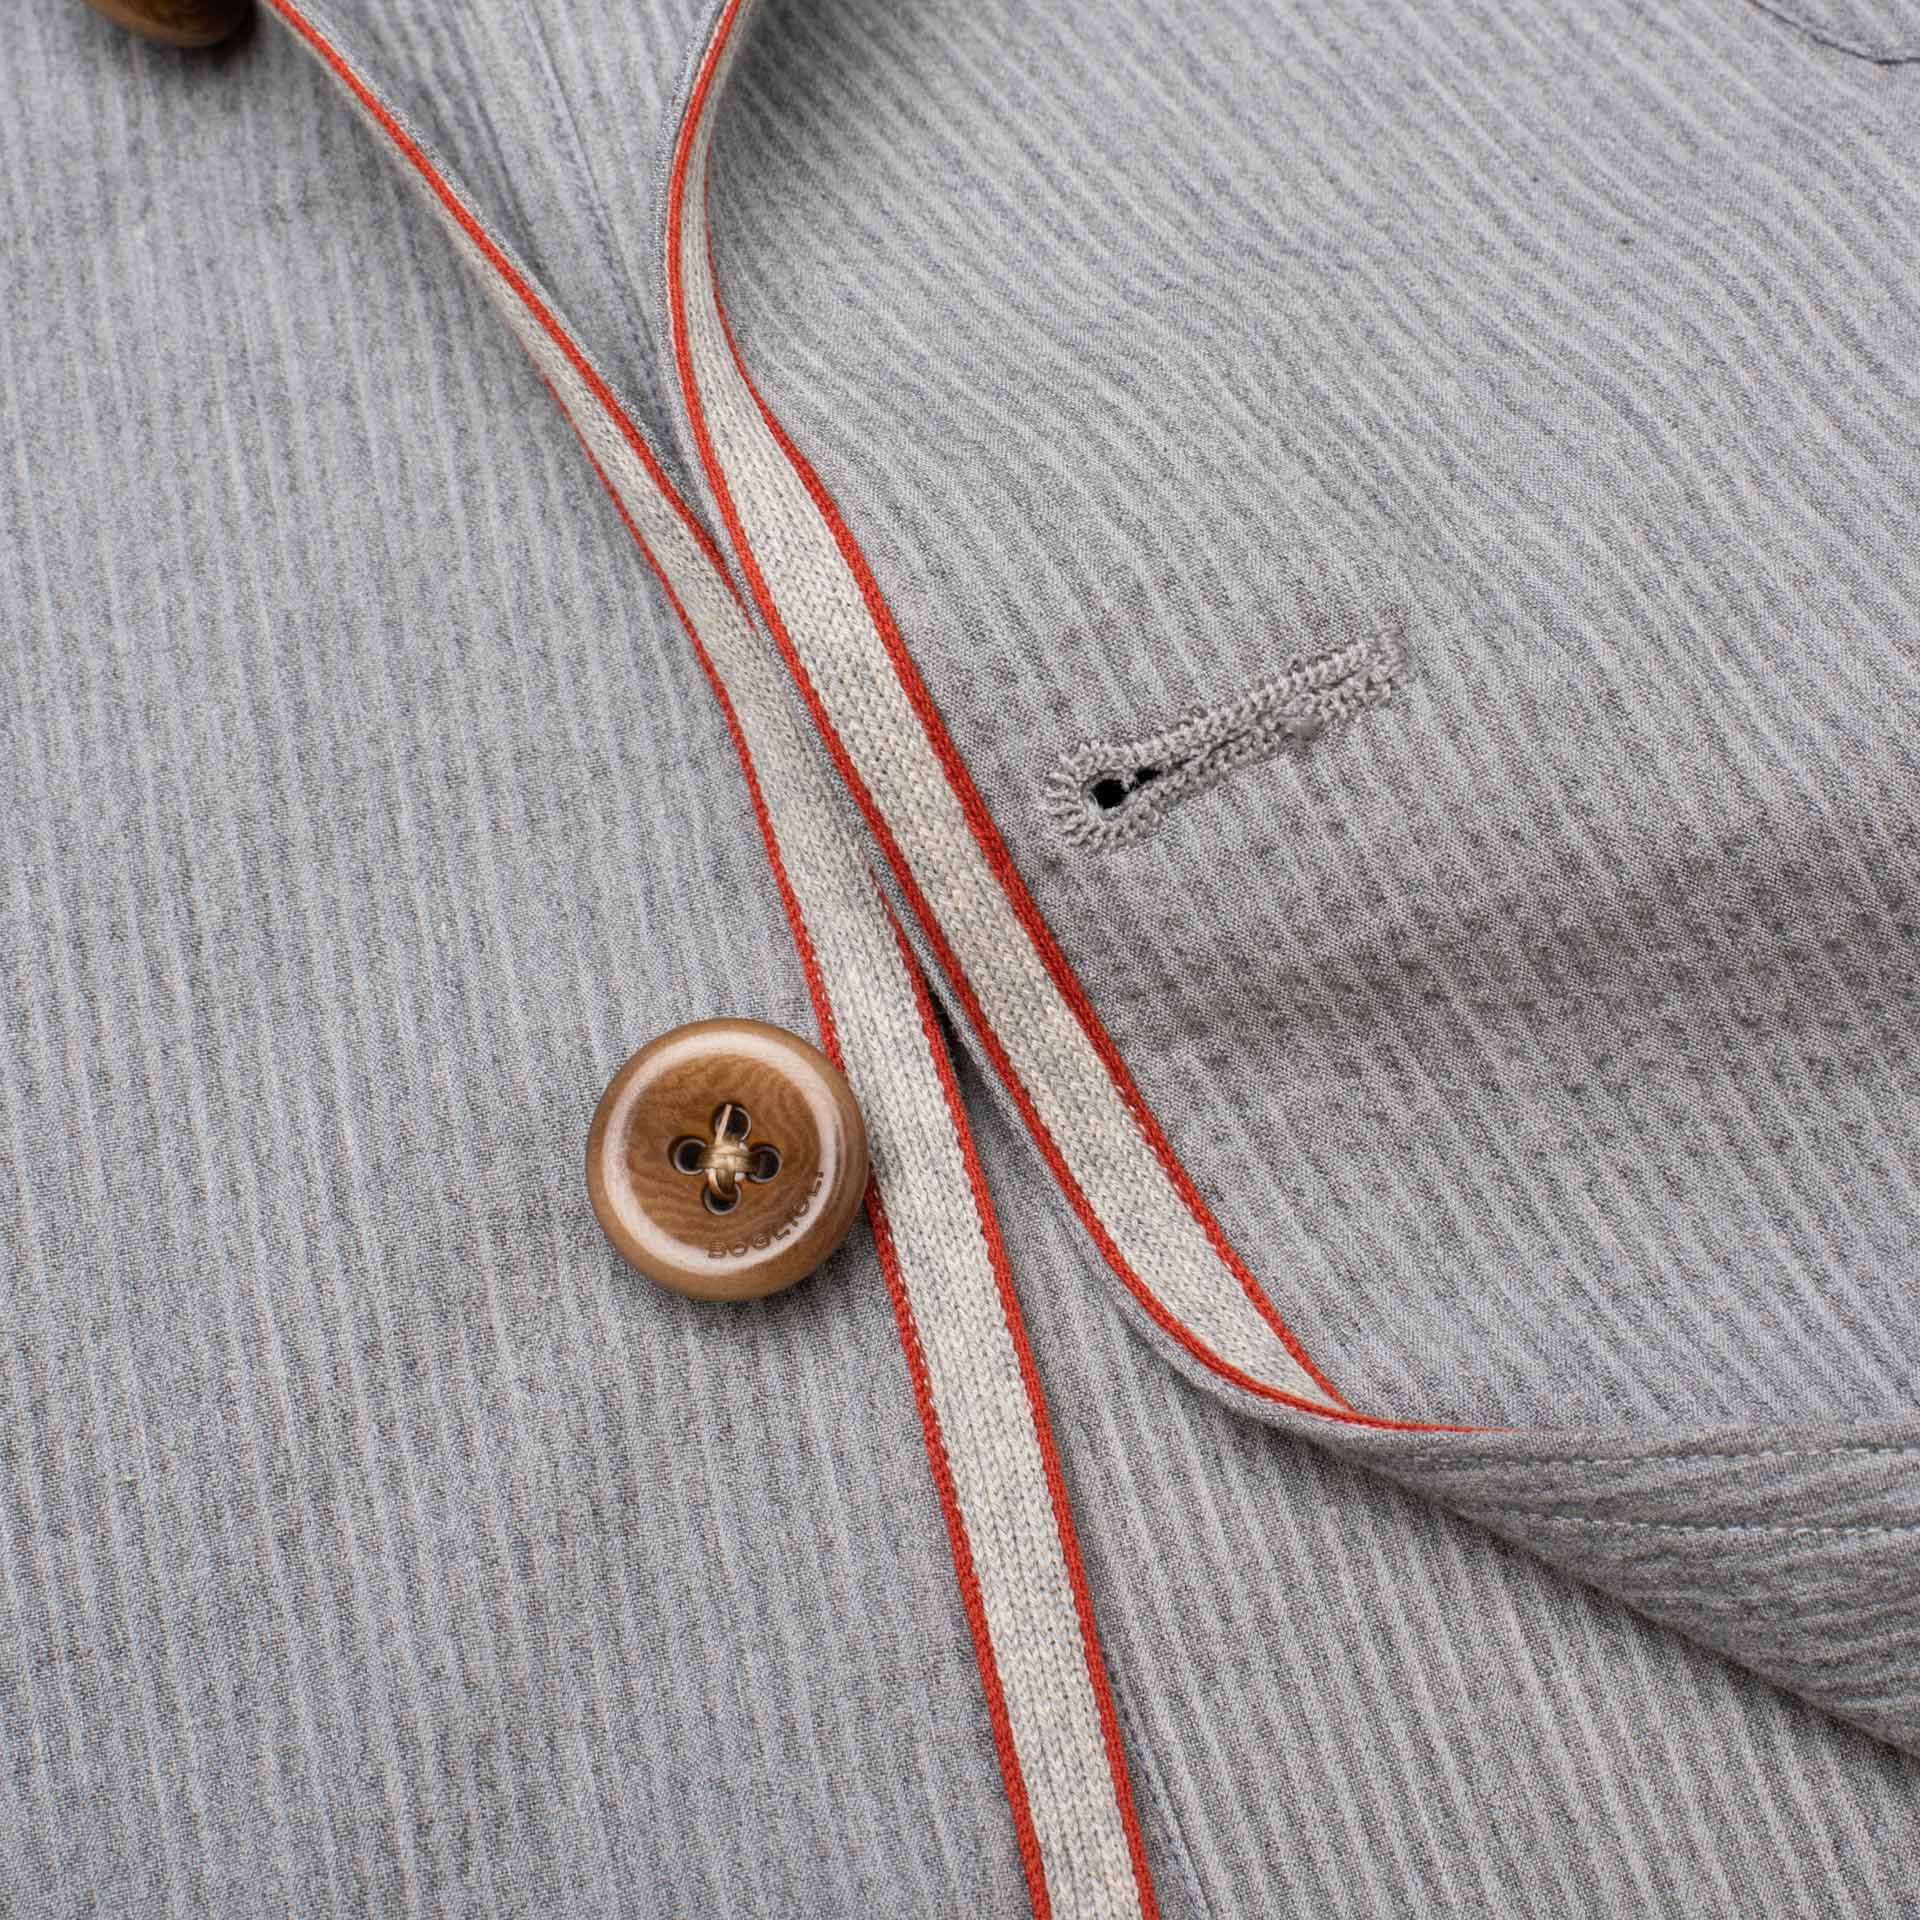 BOGLIOLI Galleria "72" Gray Striped Seersucker Cotton Unlined Jacket 50 NEW US 40 BOGLIOLI